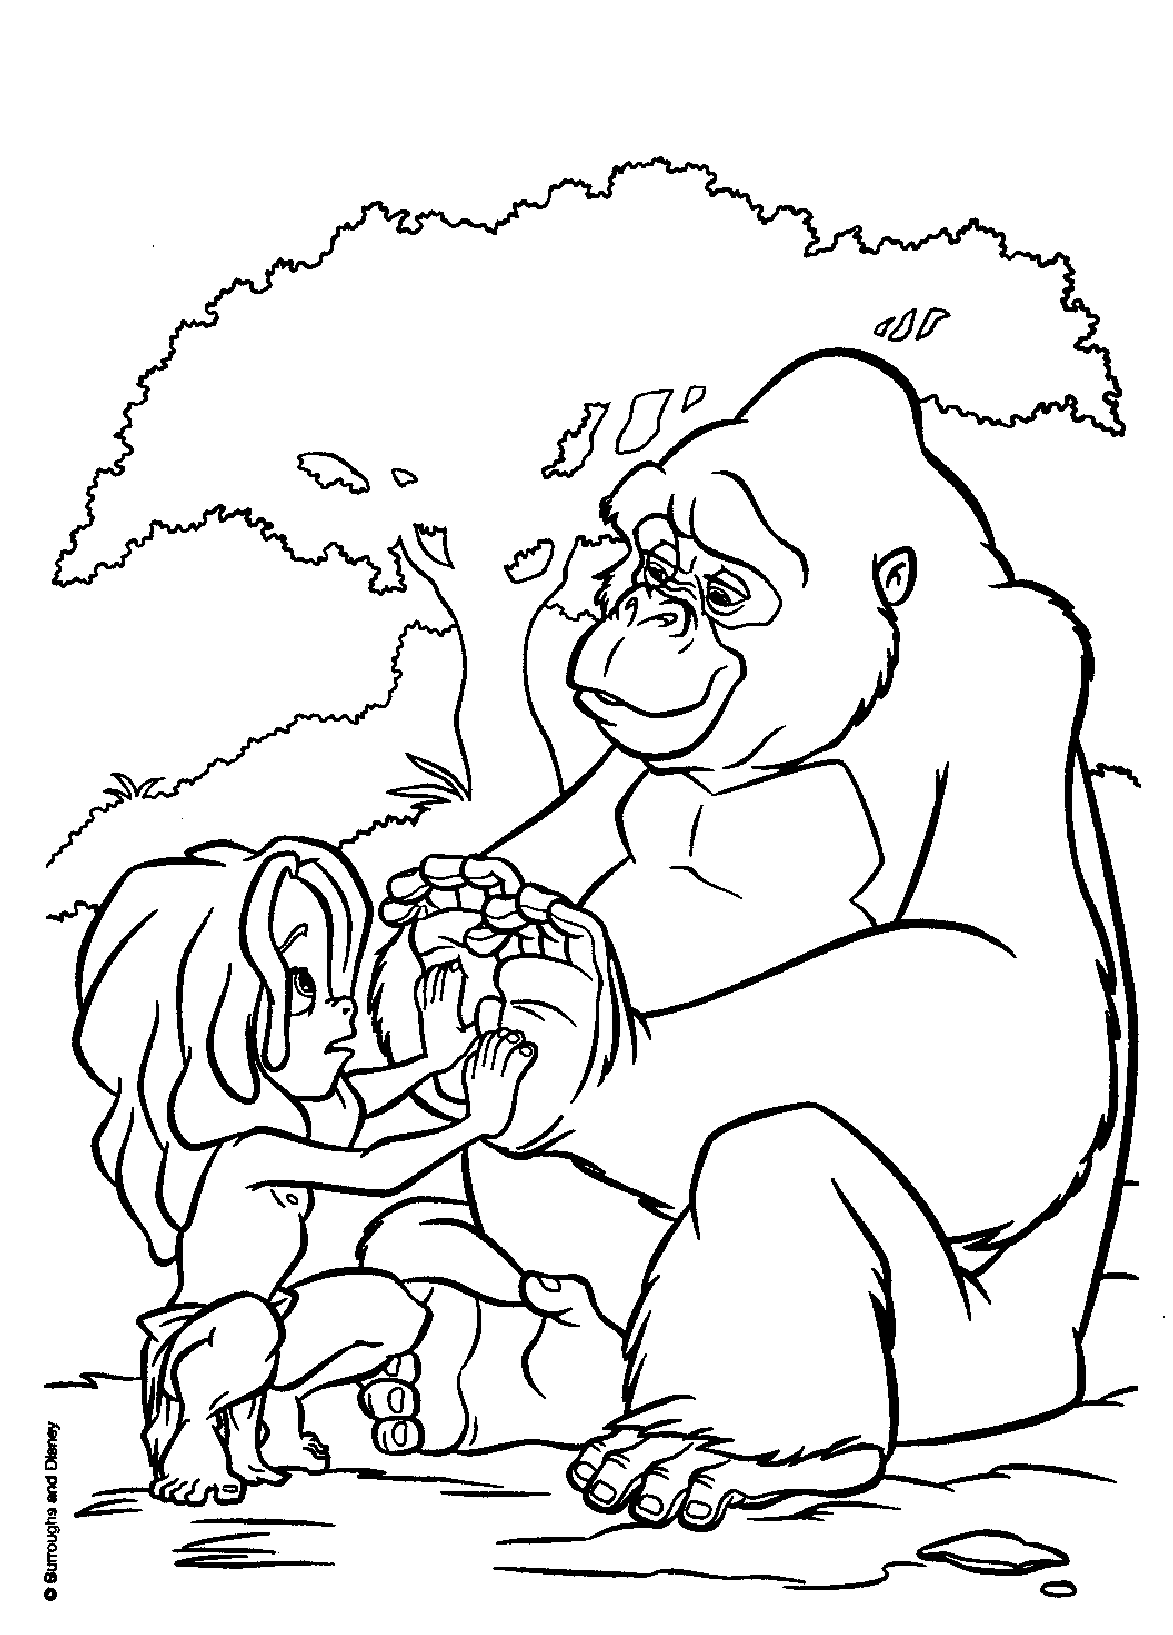 Tarzan small with his adoptive mother